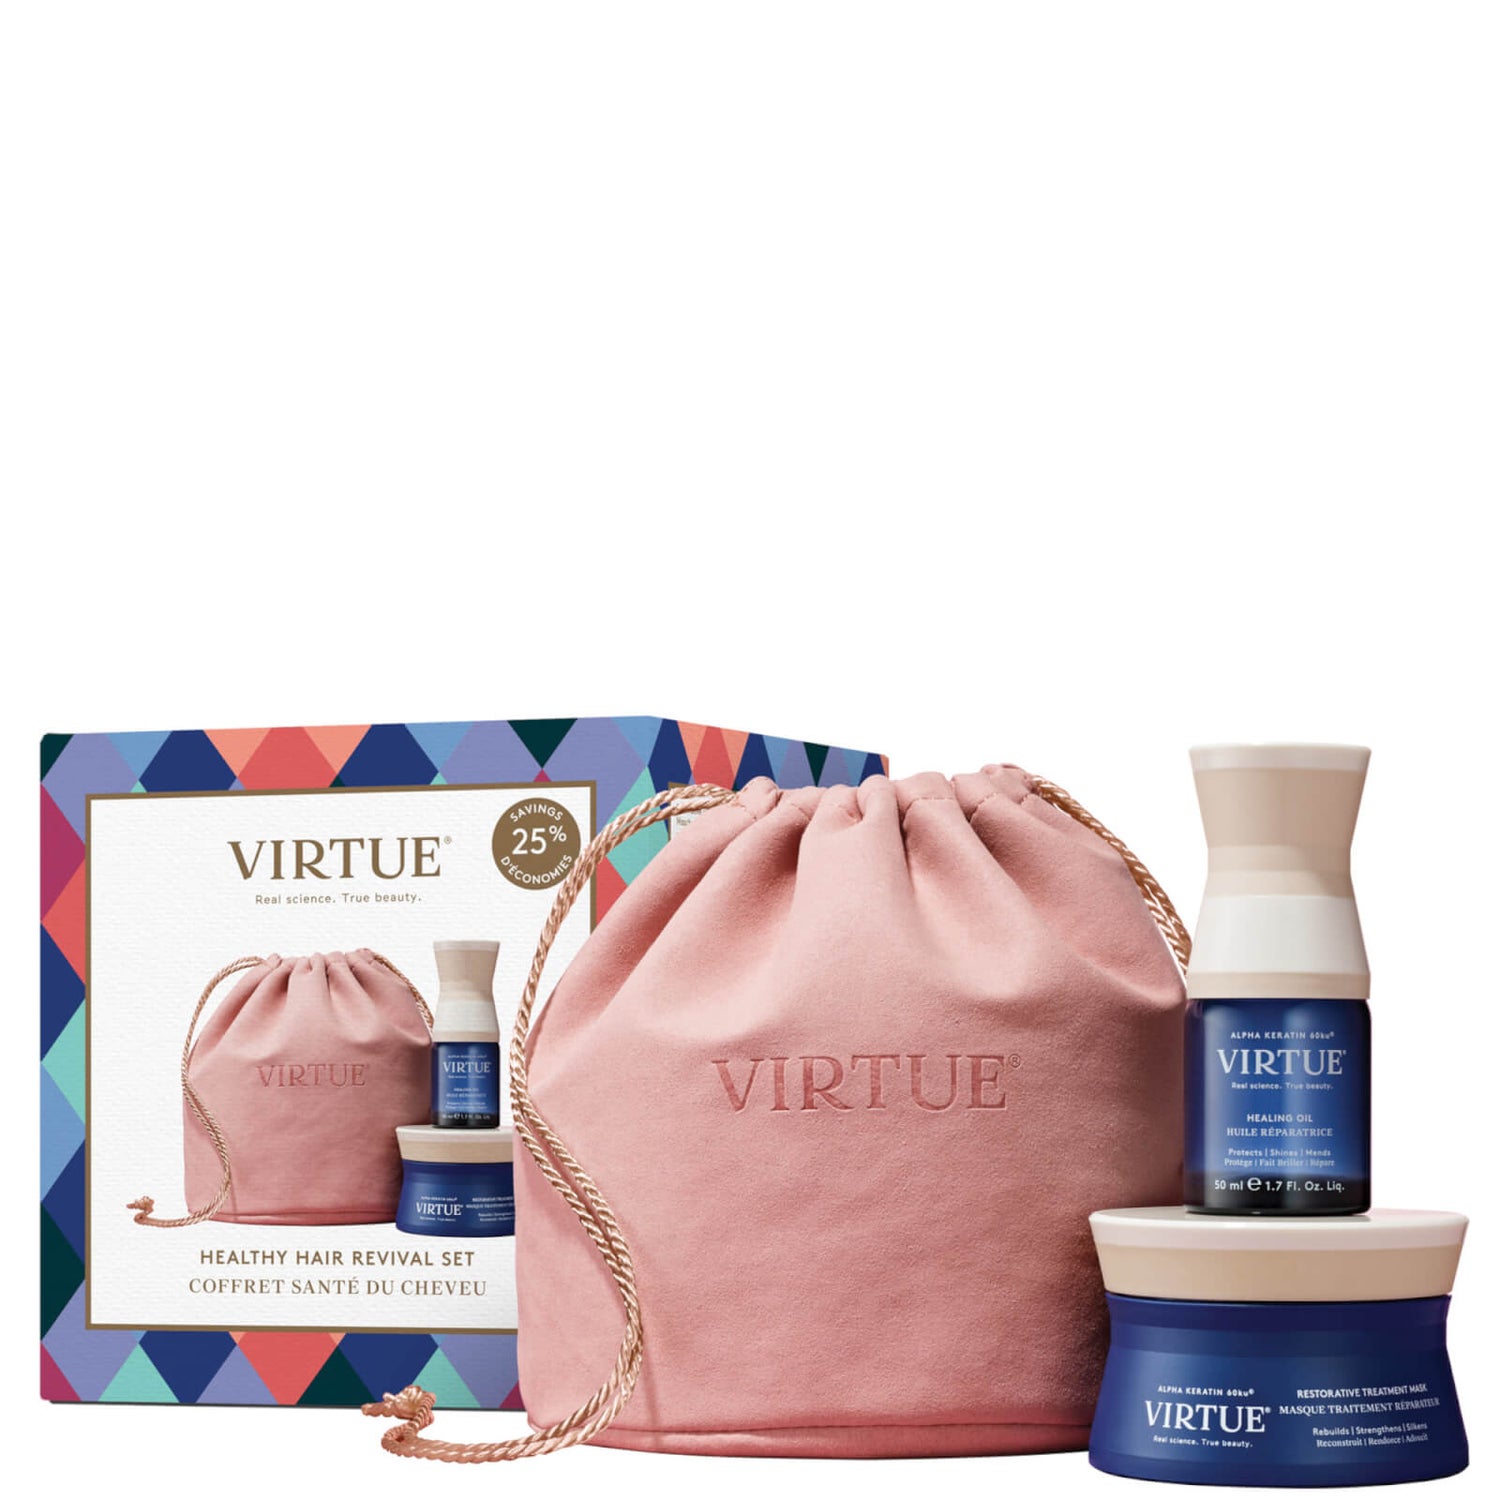 VIRTUE Healthy Hair Revival Kit (Worth $130.00)